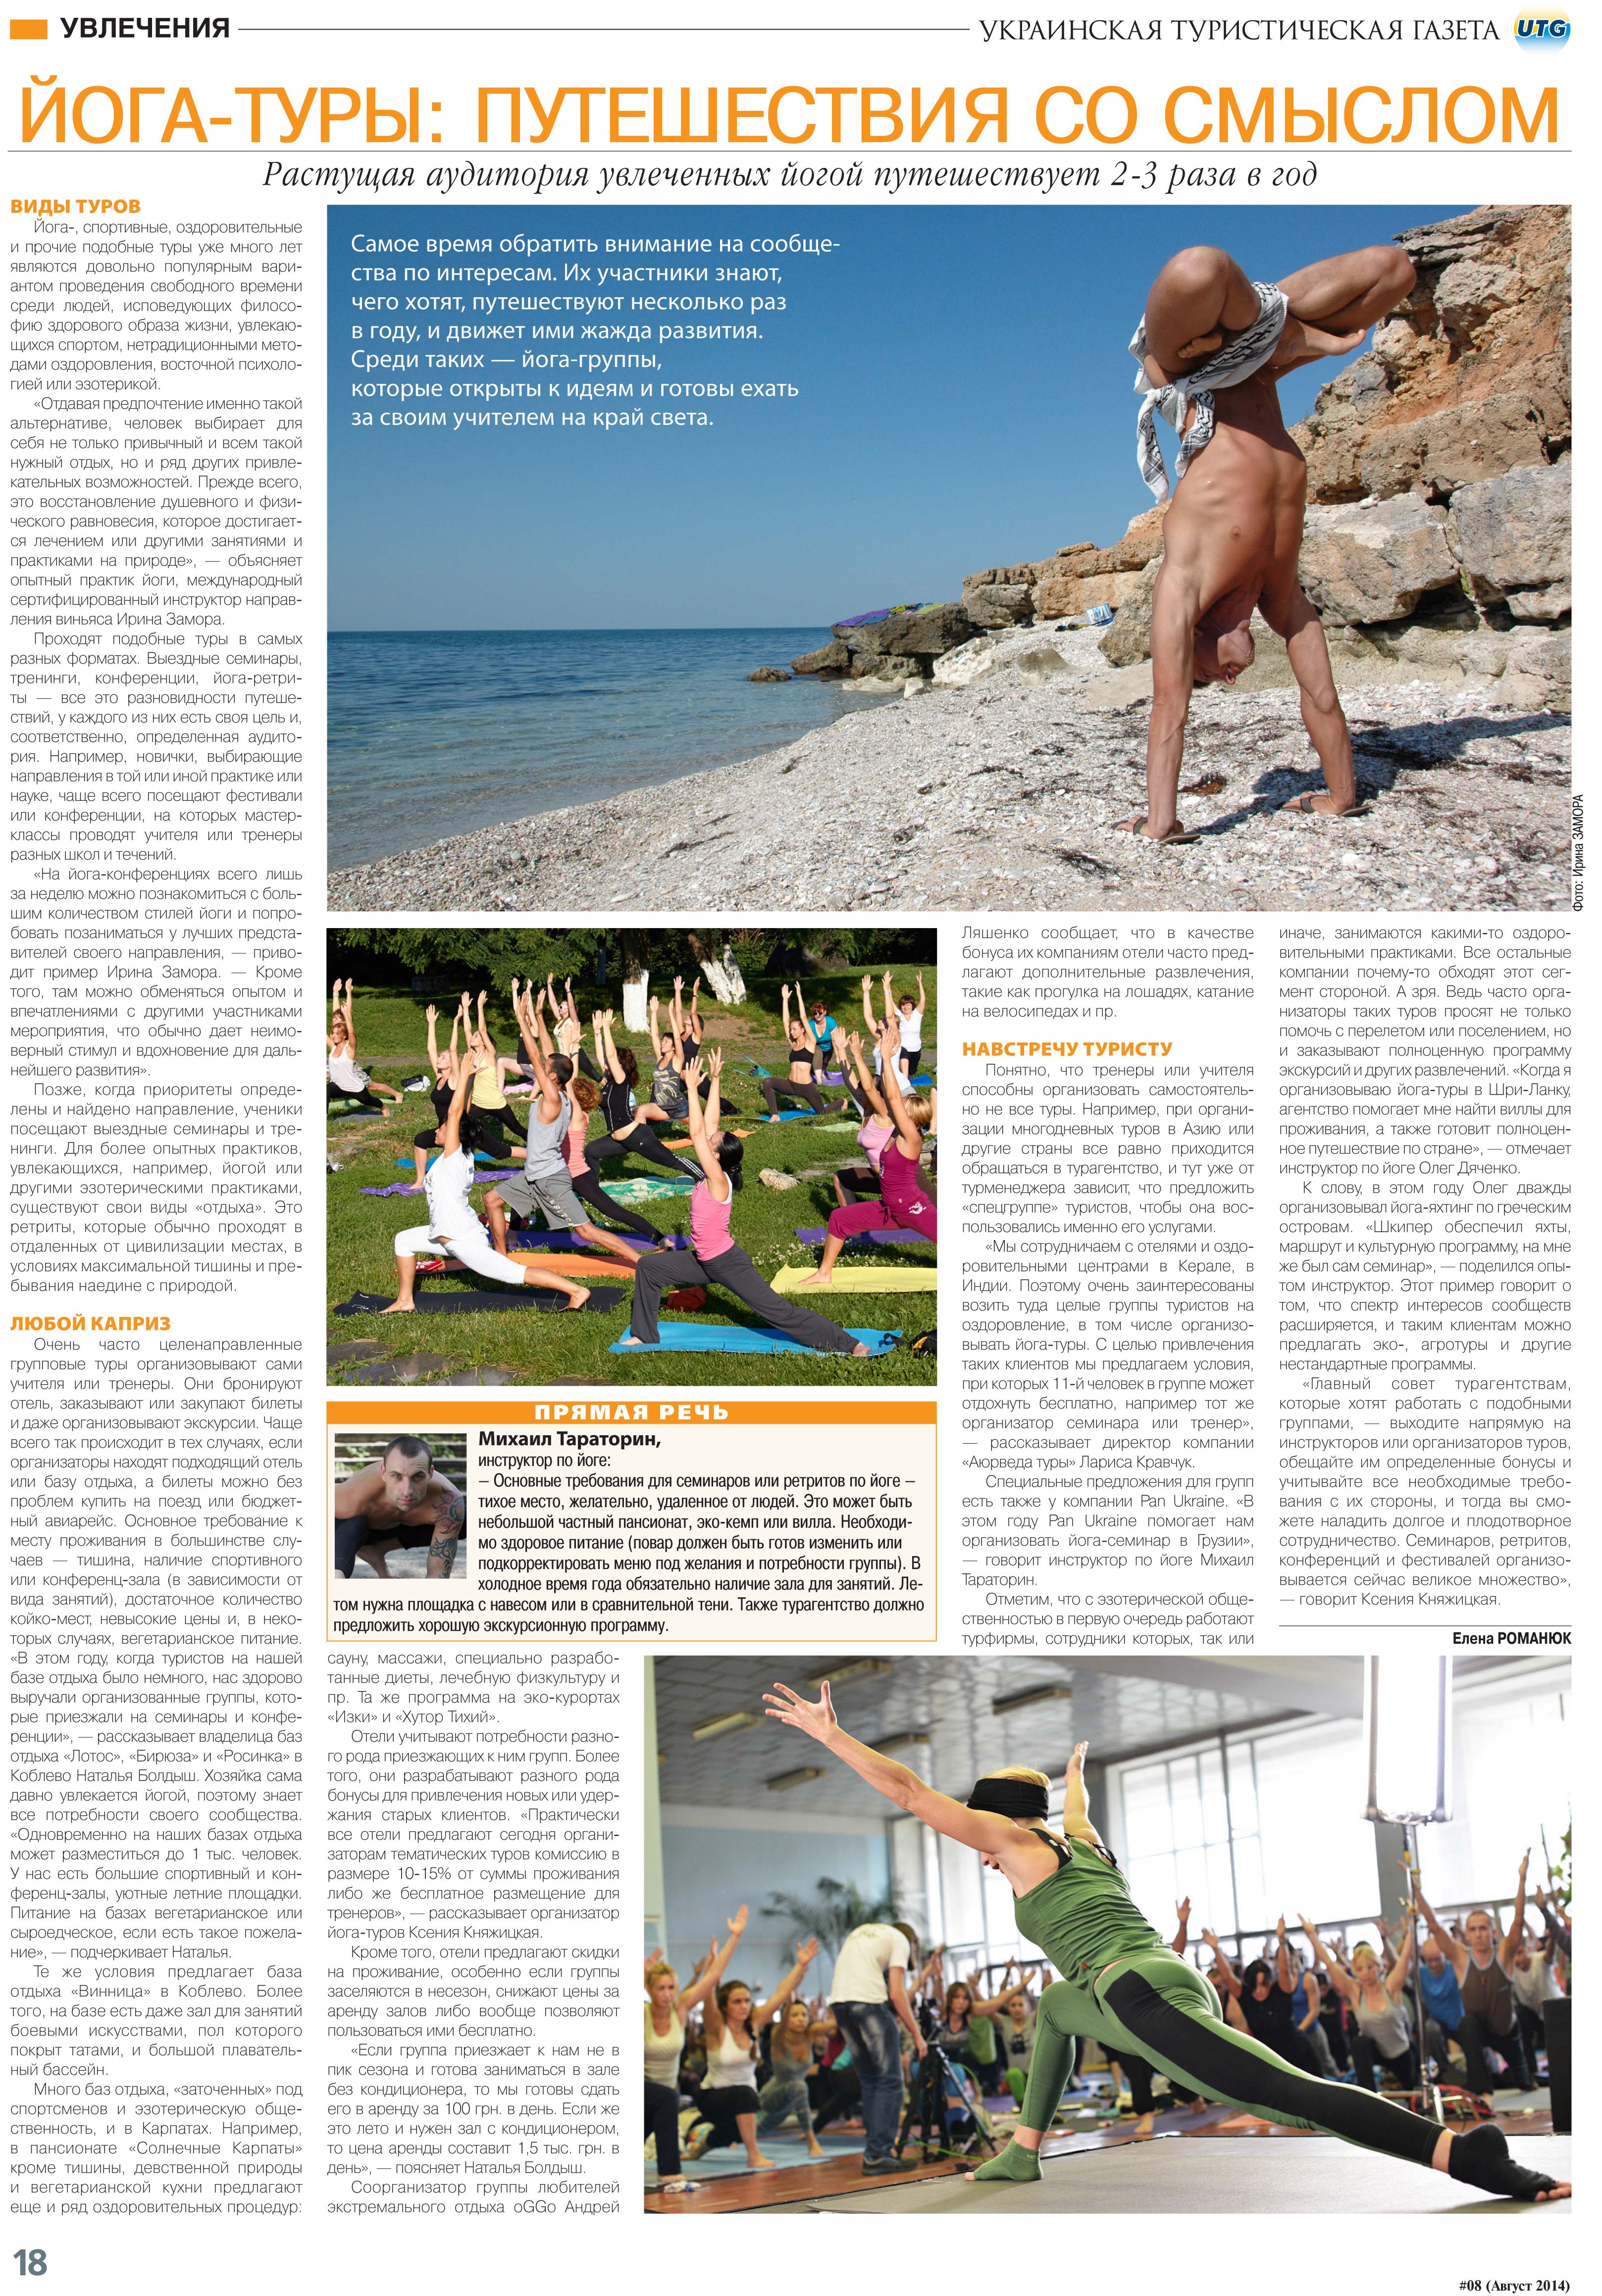 Yoga stattia Article on YOGA RETREATS. Kyiv.